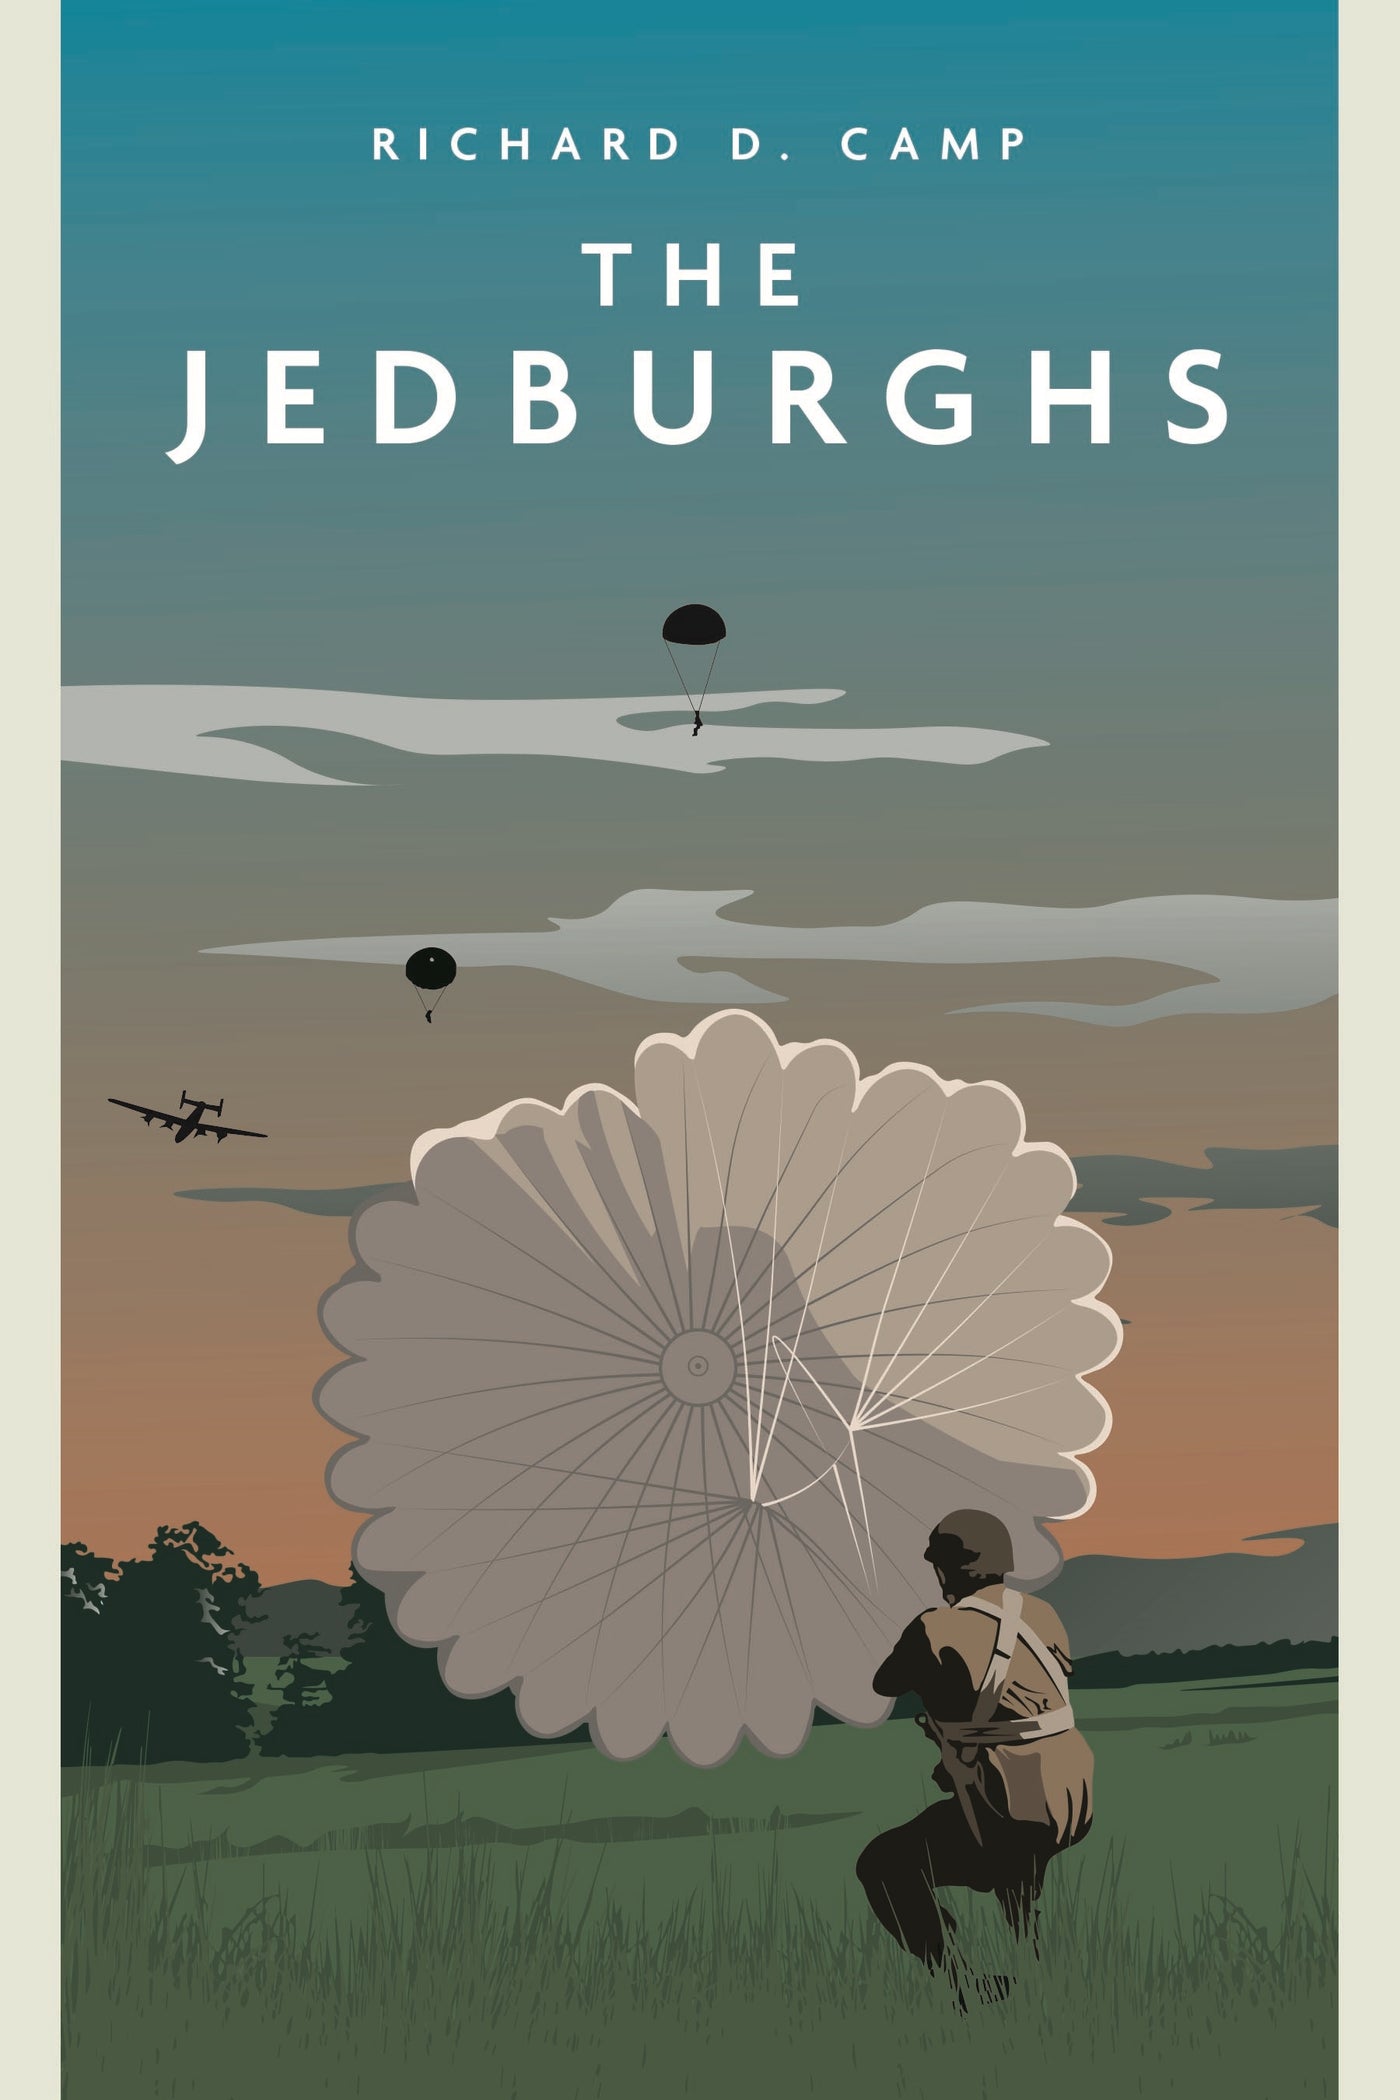 The Jedburghs